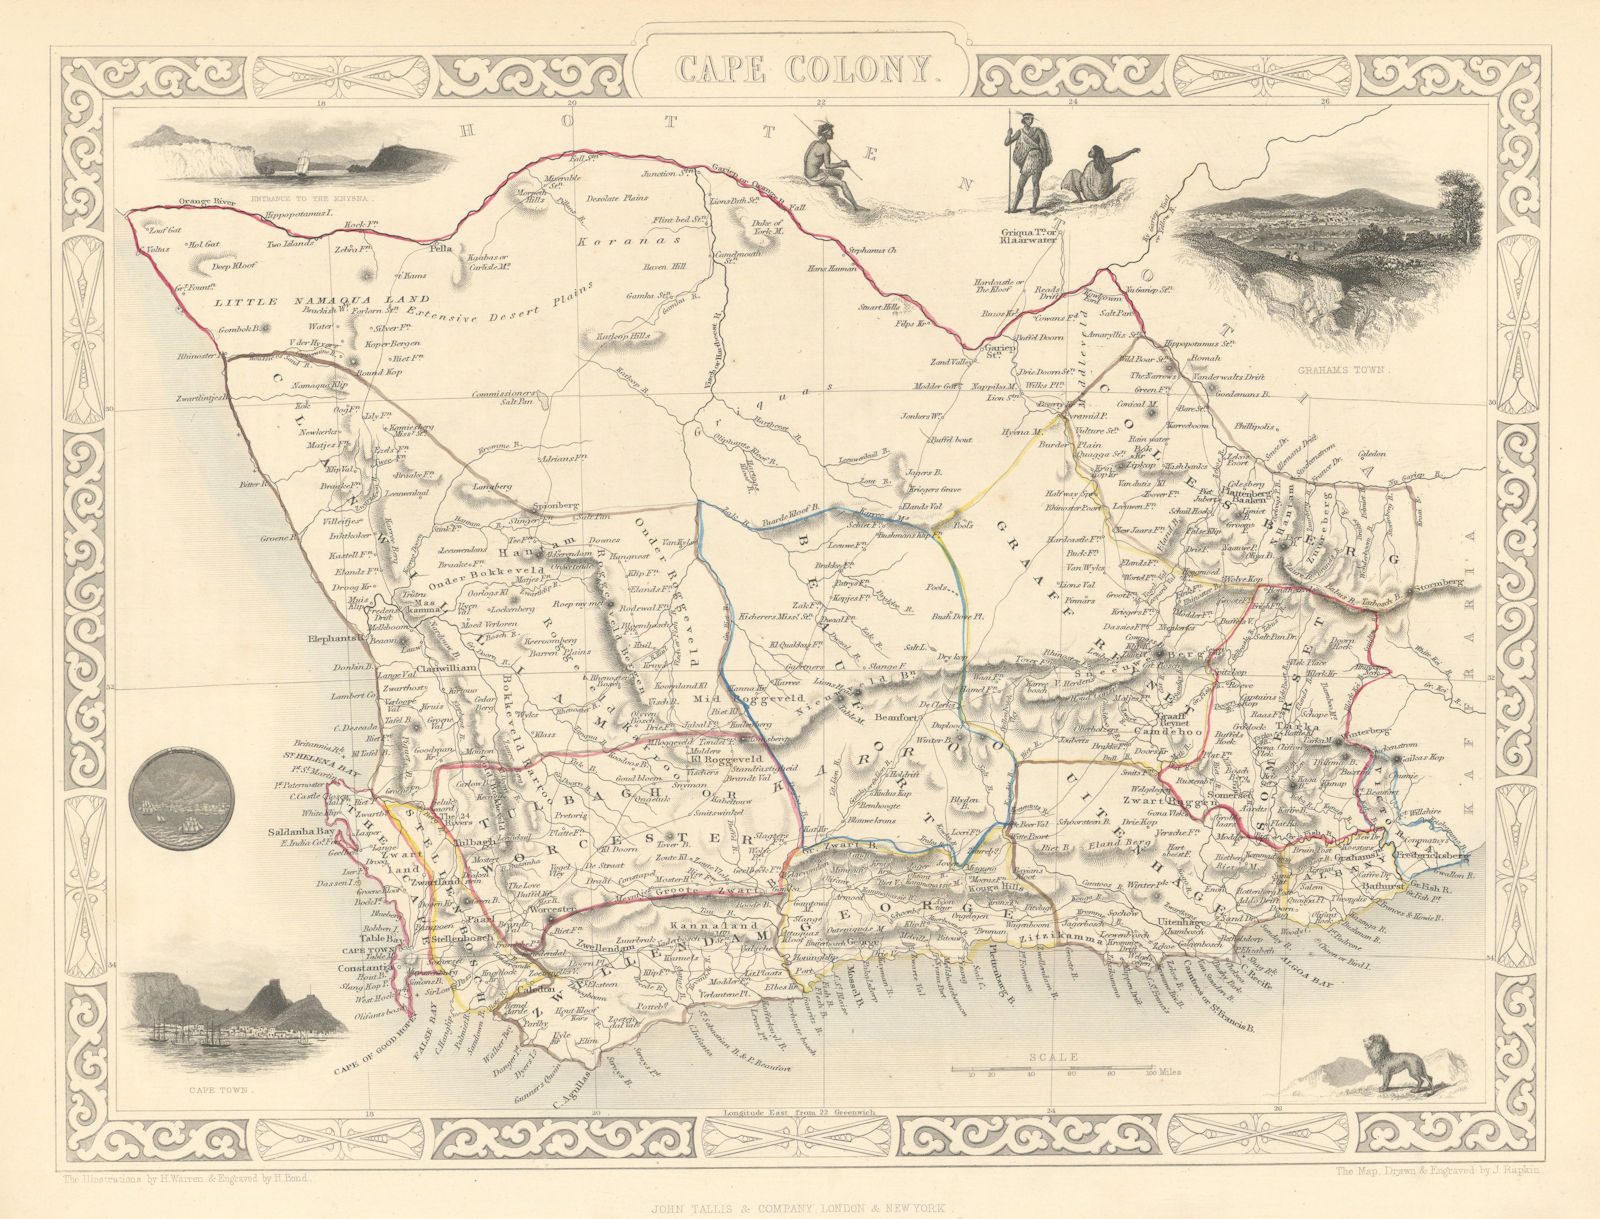 CAPE COLONY. Cape Town / Grahamstown views. South Africa. RAPKIN/TALLIS 1851 map